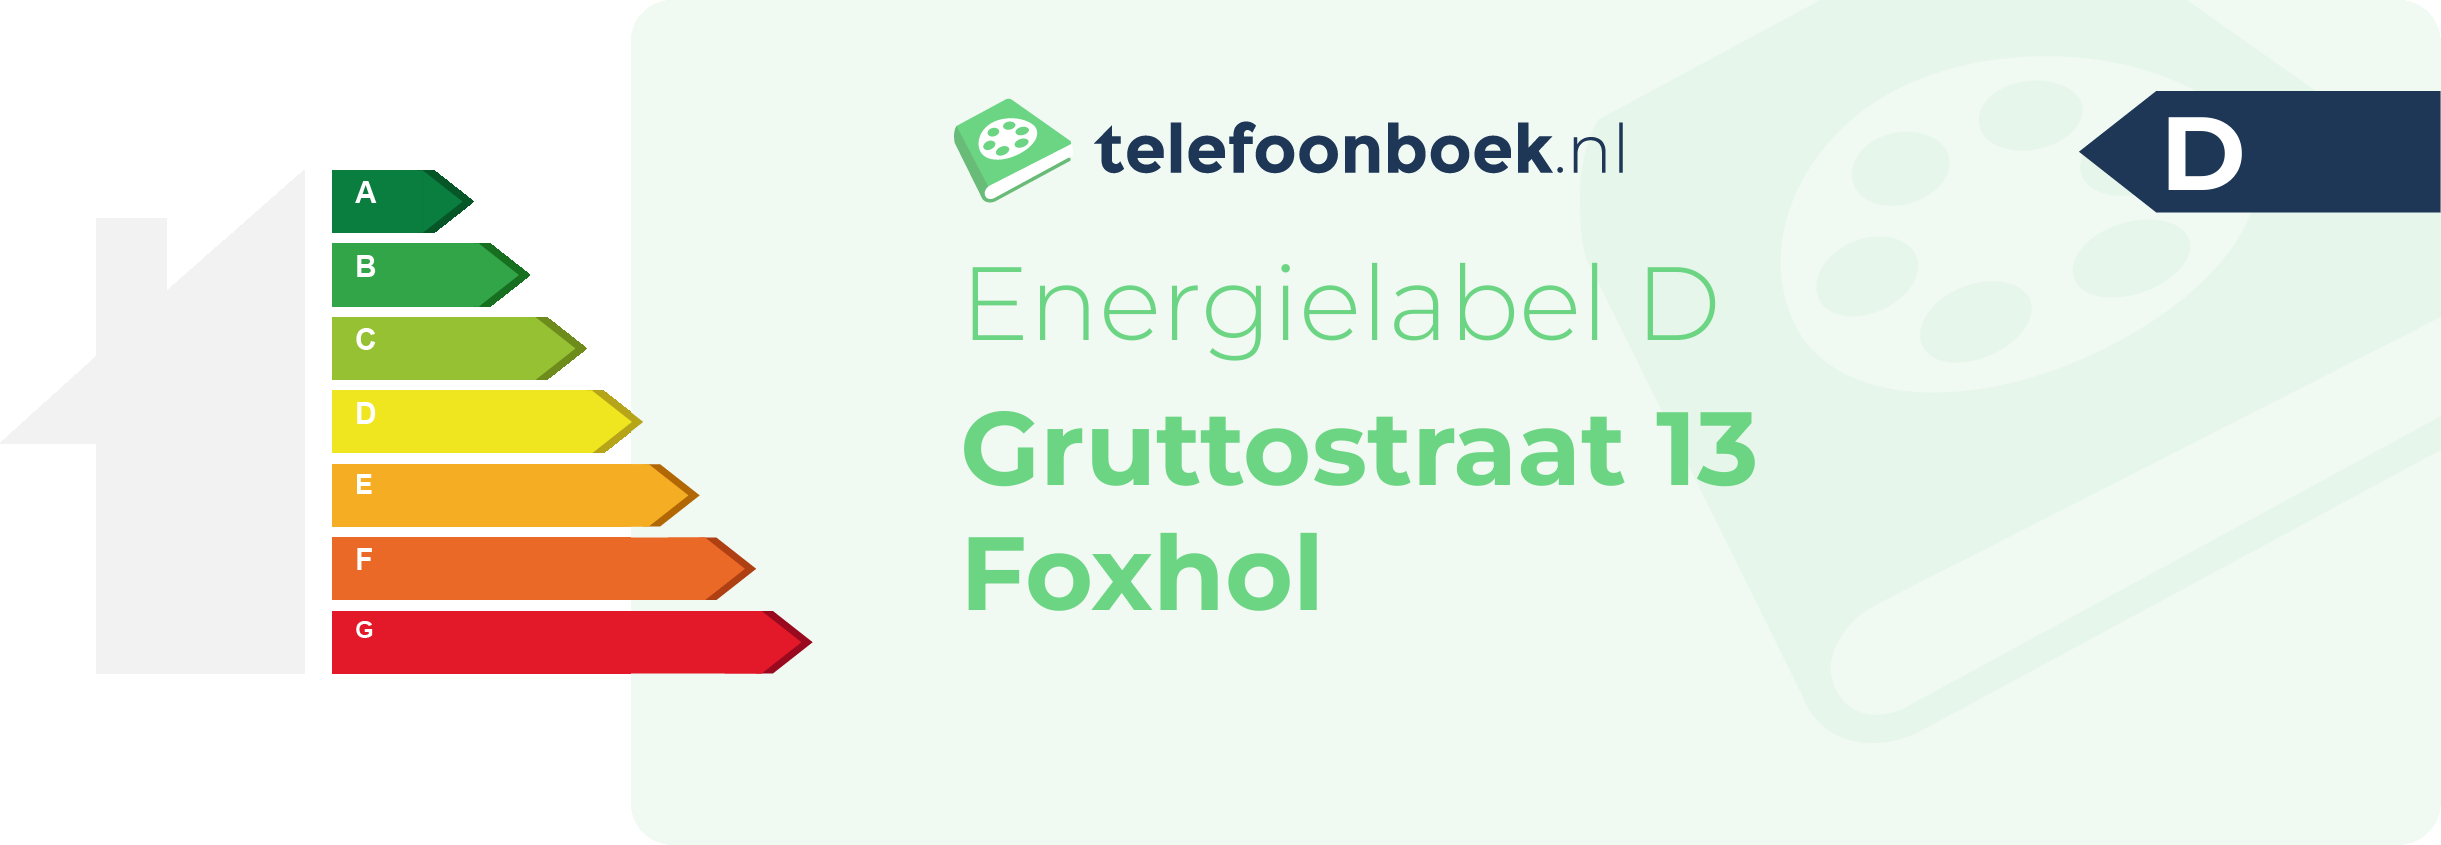 Energielabel Gruttostraat 13 Foxhol